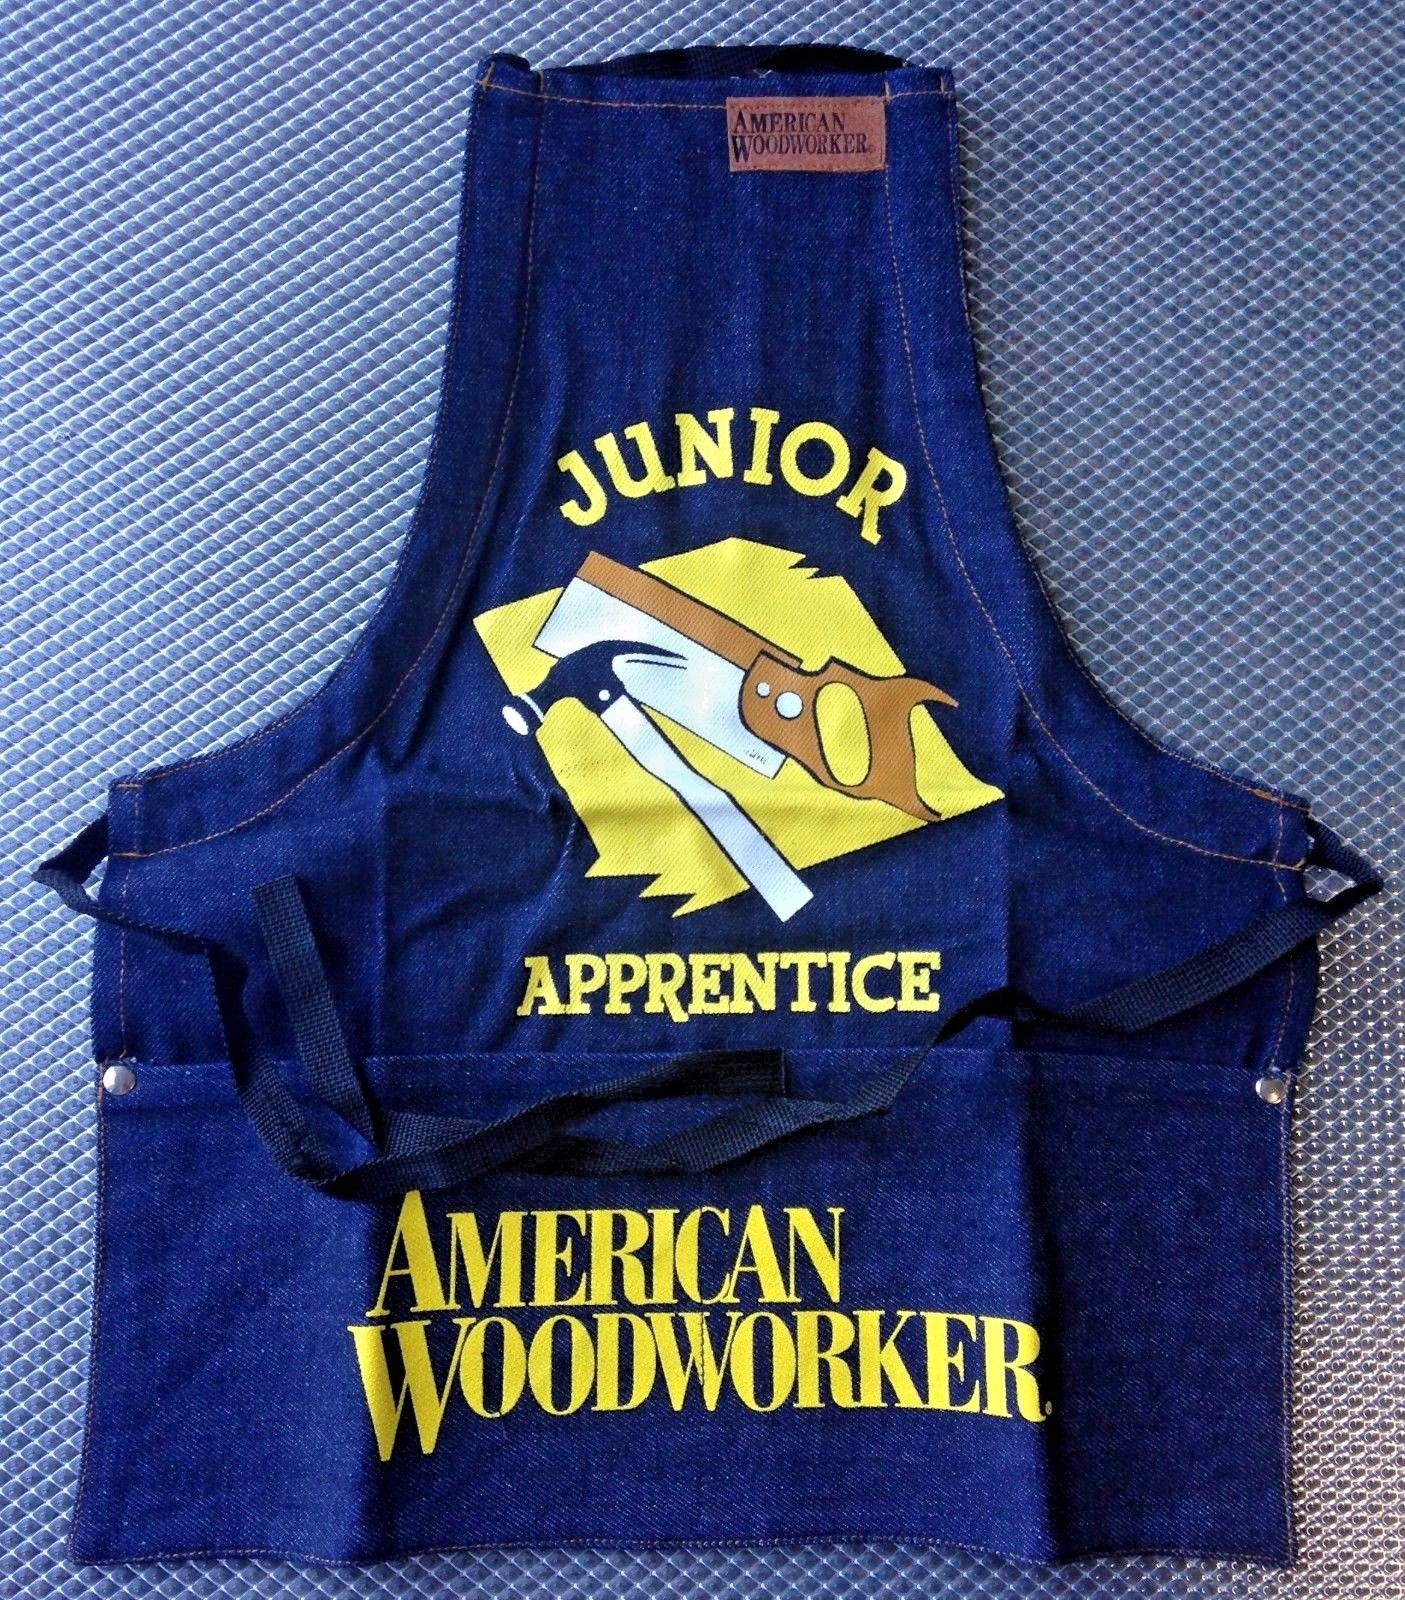 American Woodworker 113 JR. Bib Shop Apron 18" x 14.5"